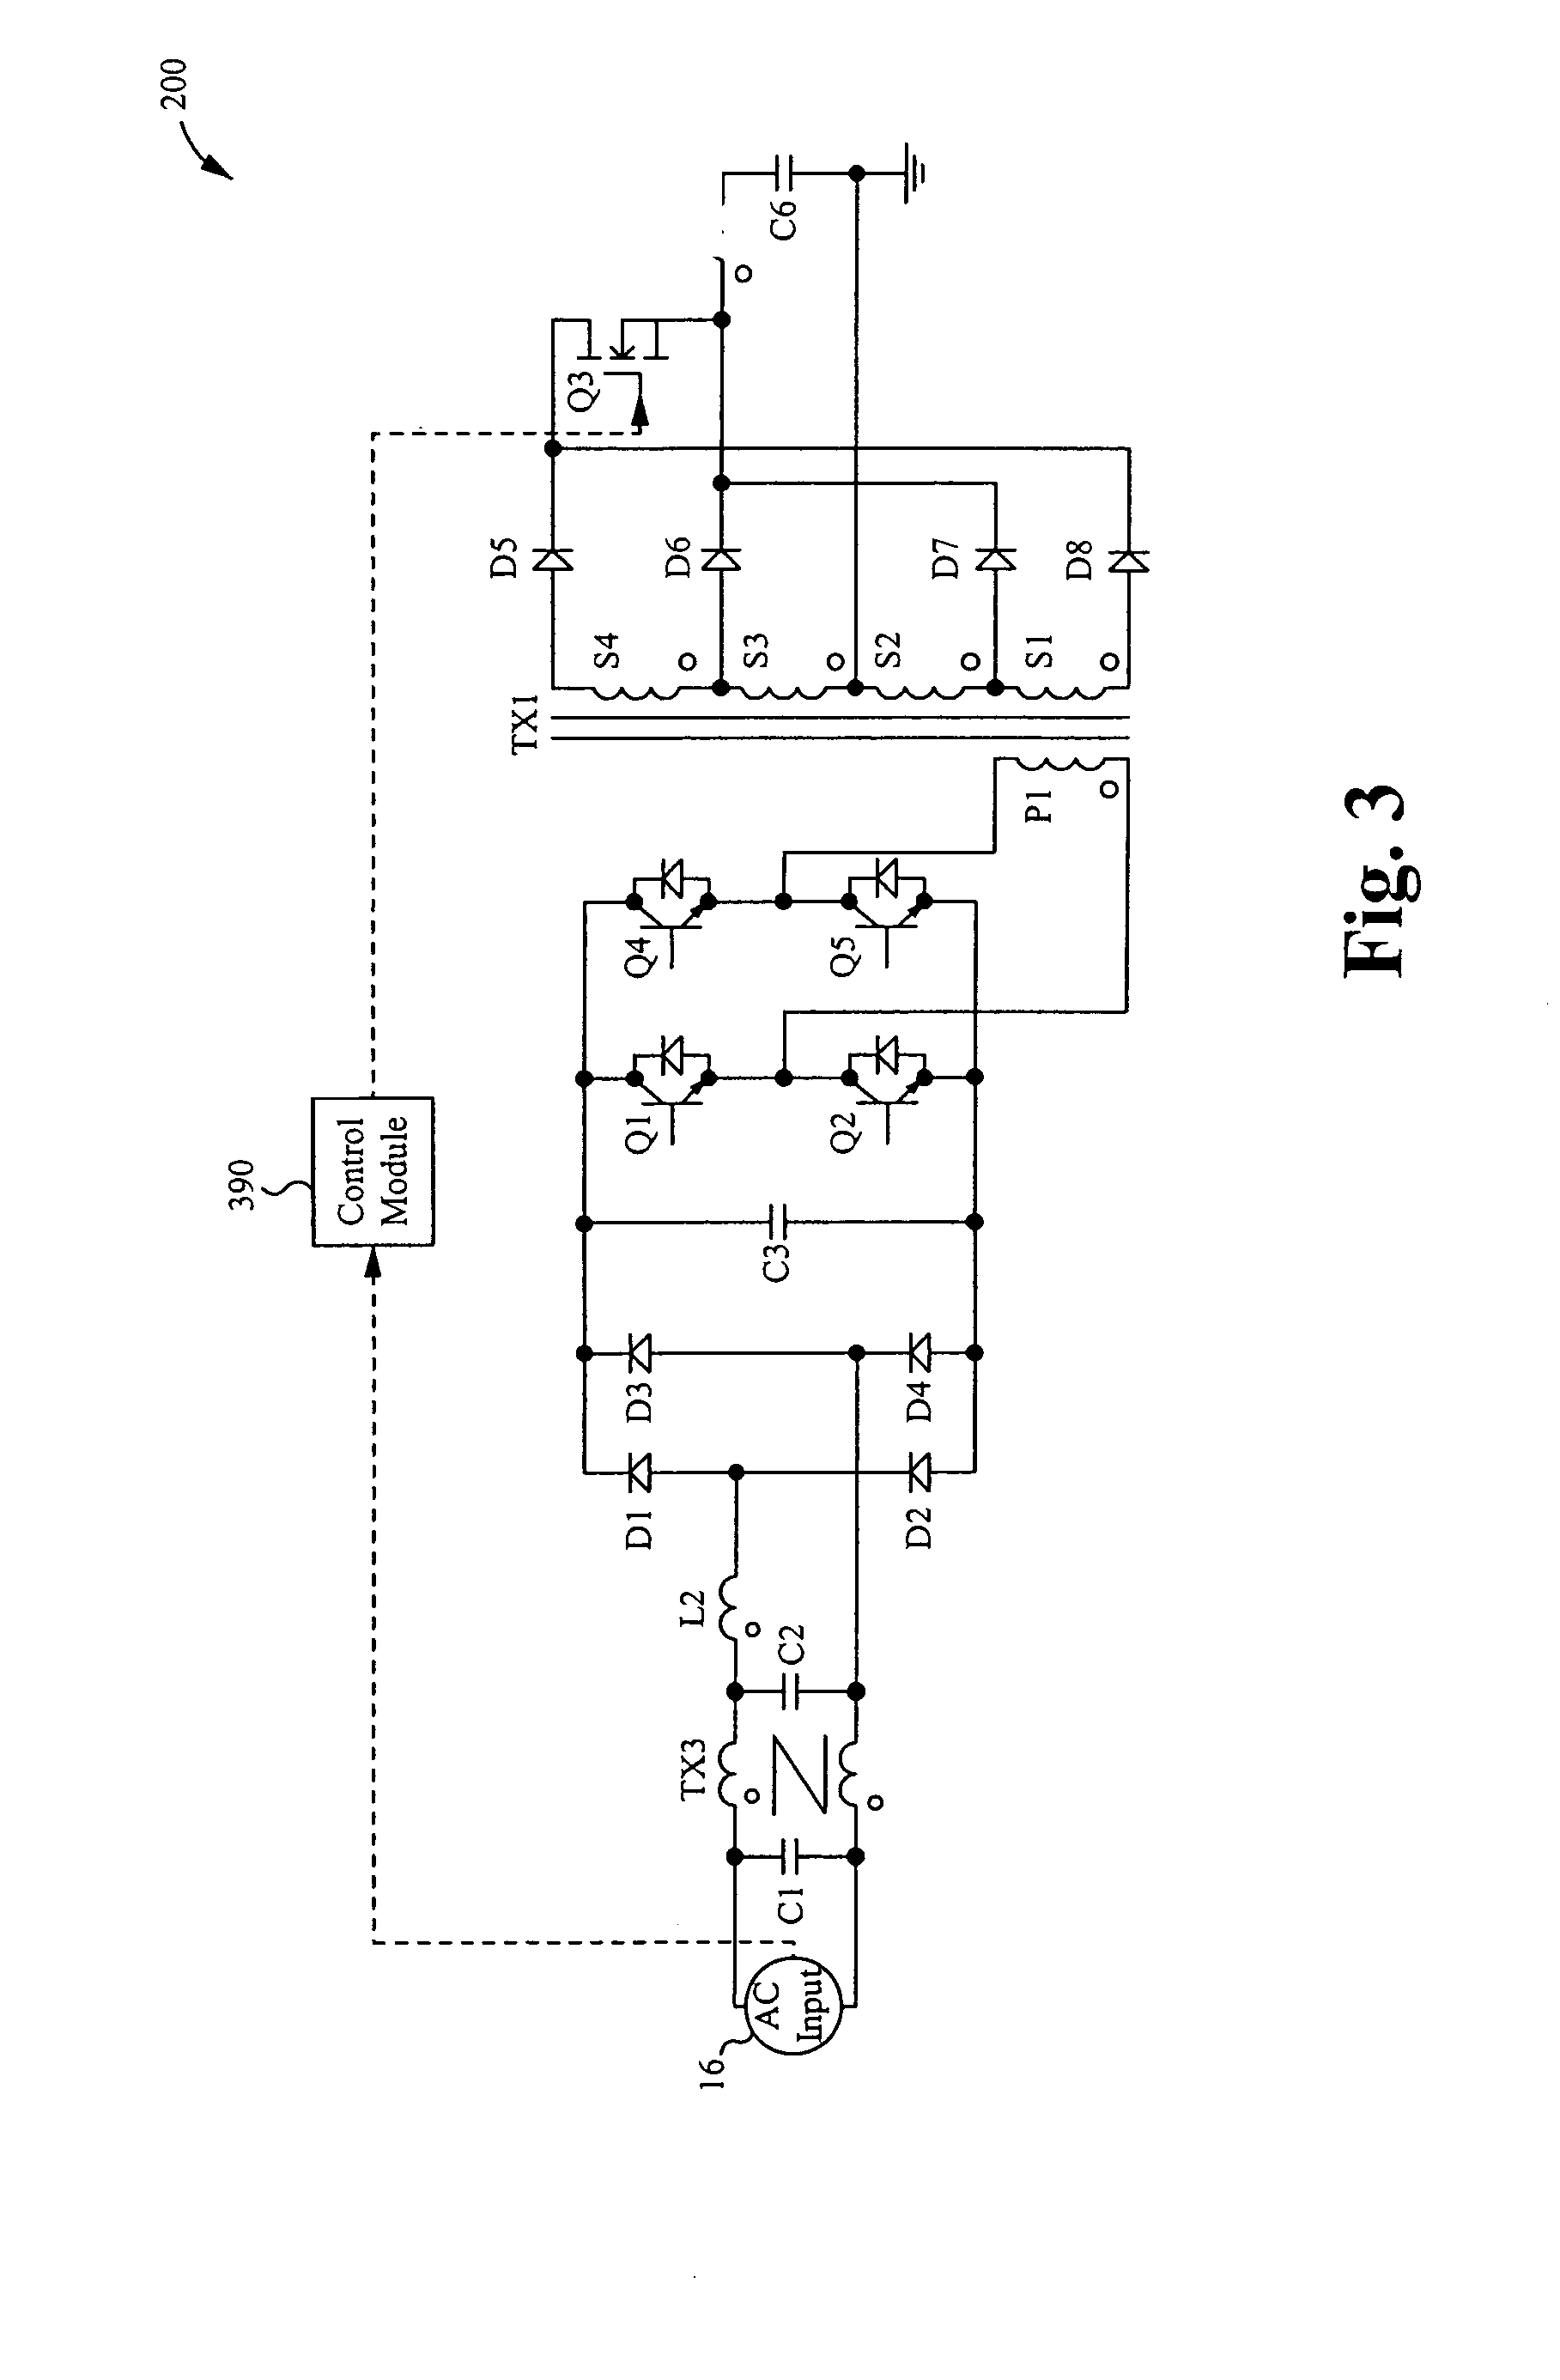 High power factor isolated buck-type power factor correction converter